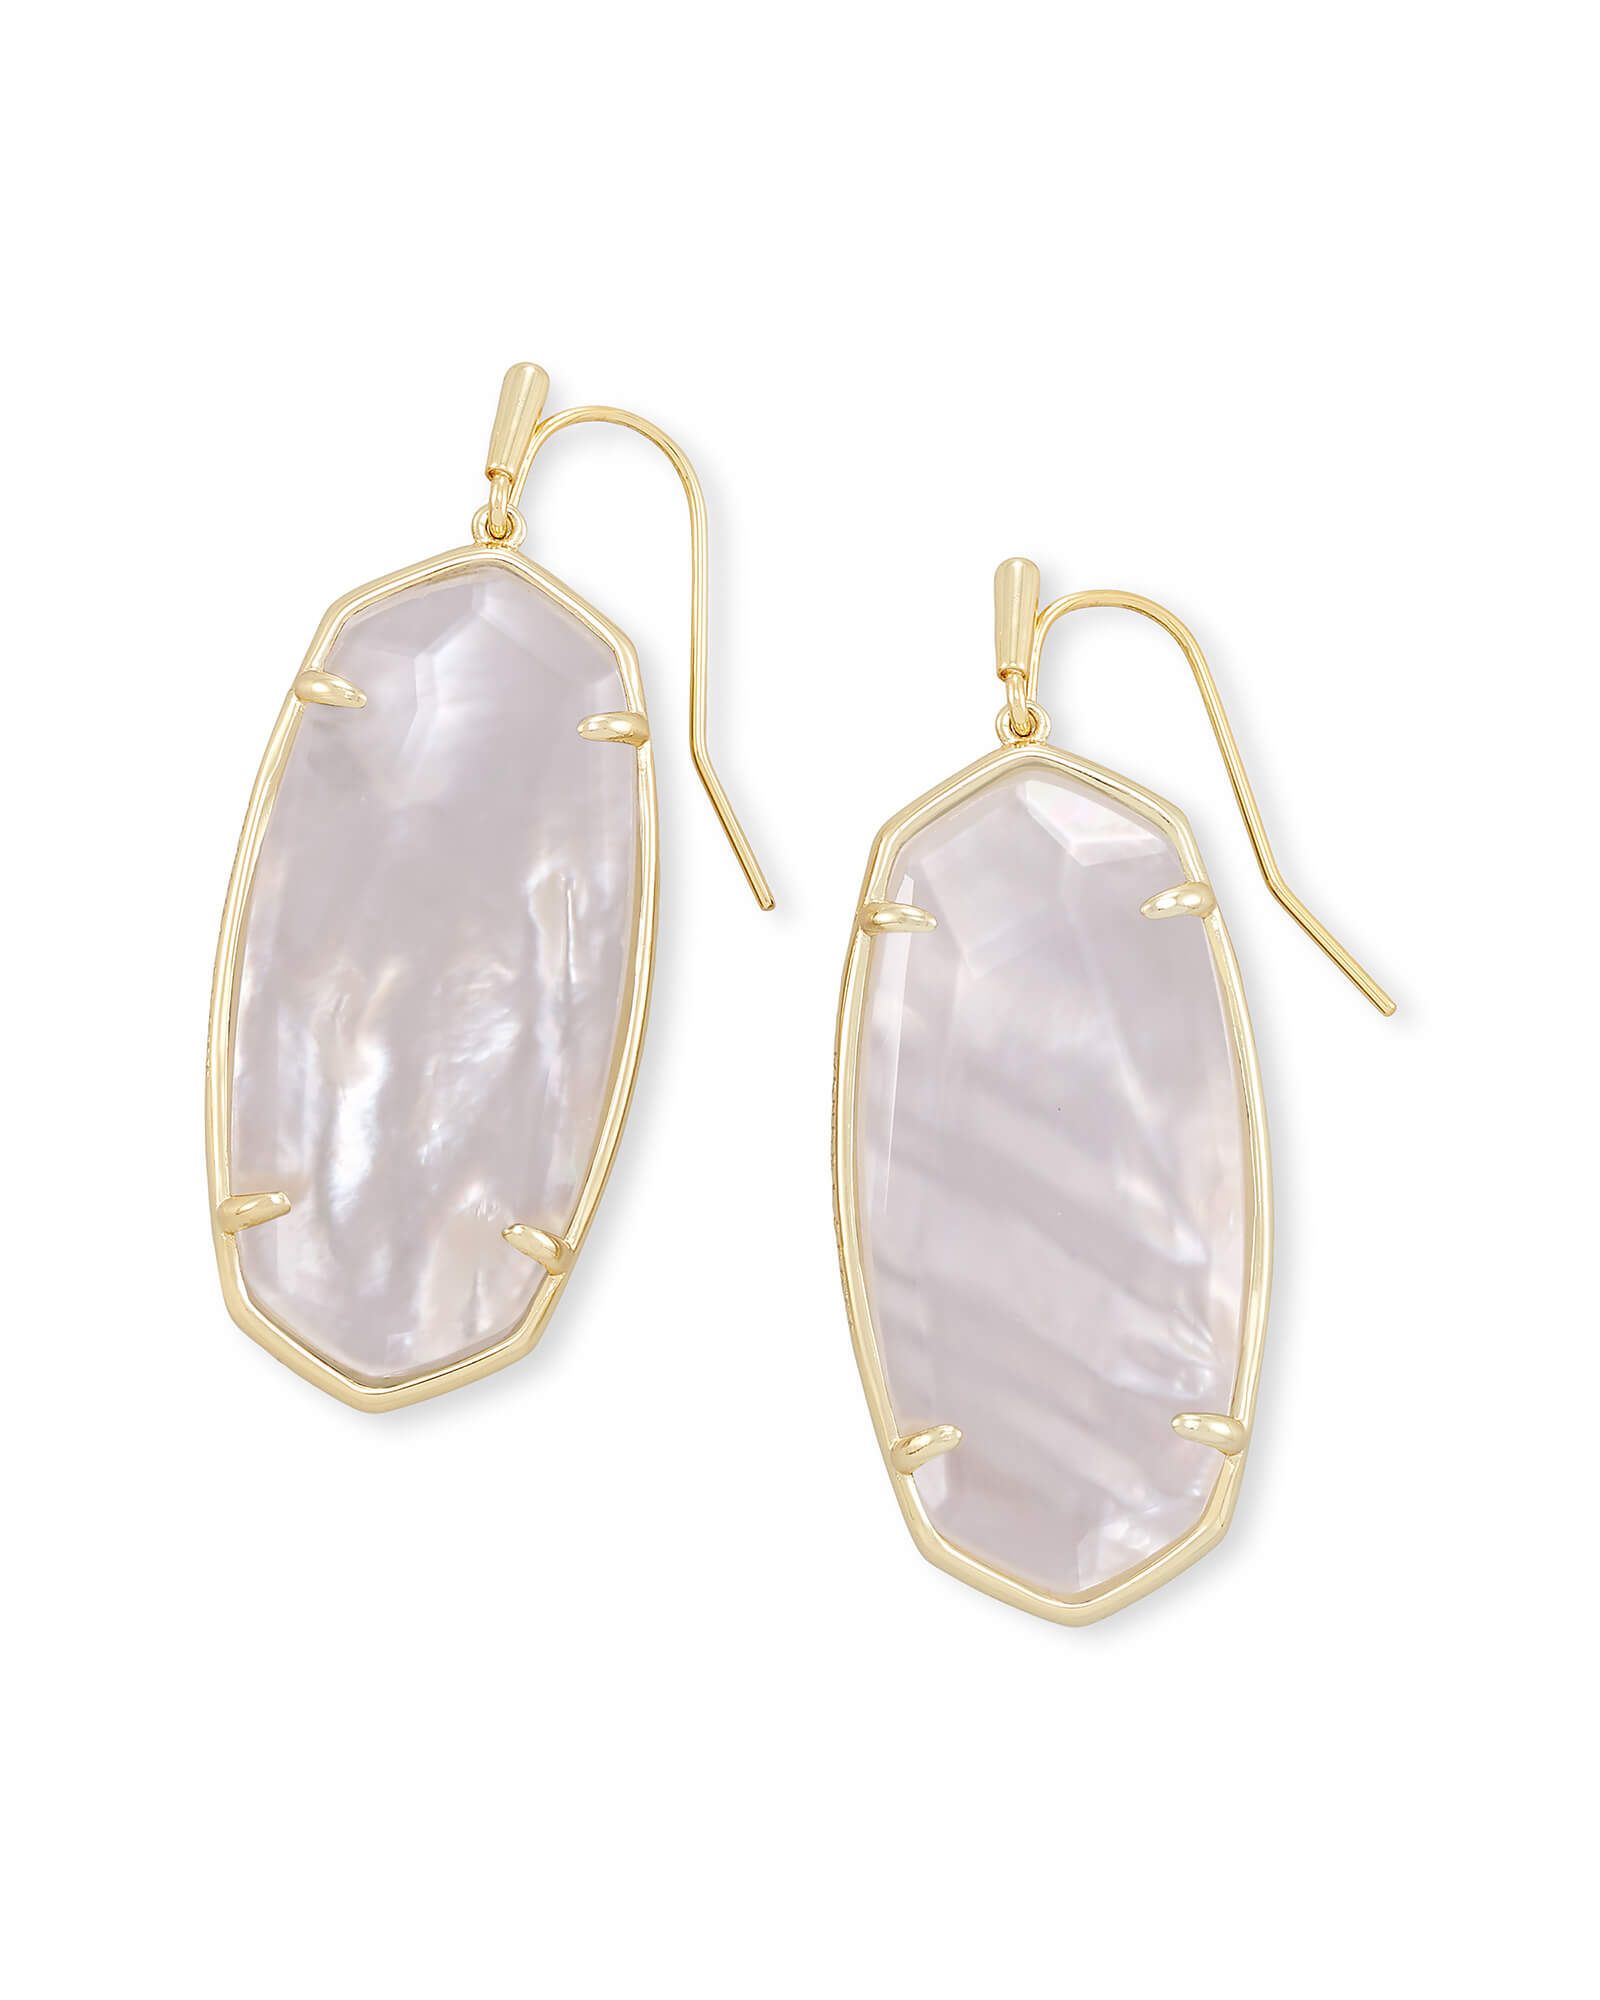 Faceted Elle Gold Drop Earrings in Ivory Mother-of-Pearl | Kendra Scott